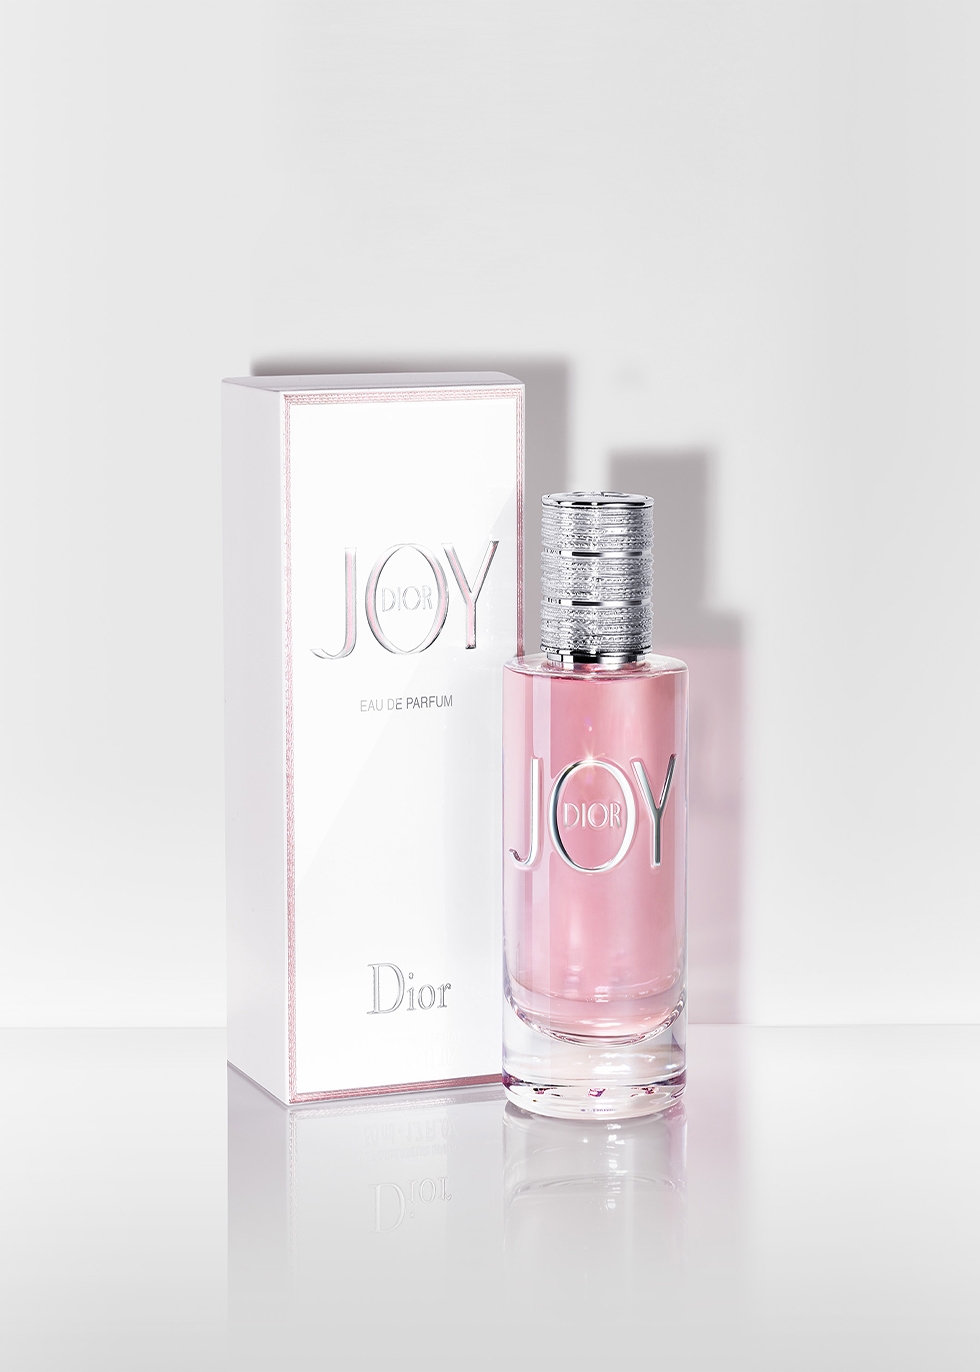 dior joy 50ml eau de parfum